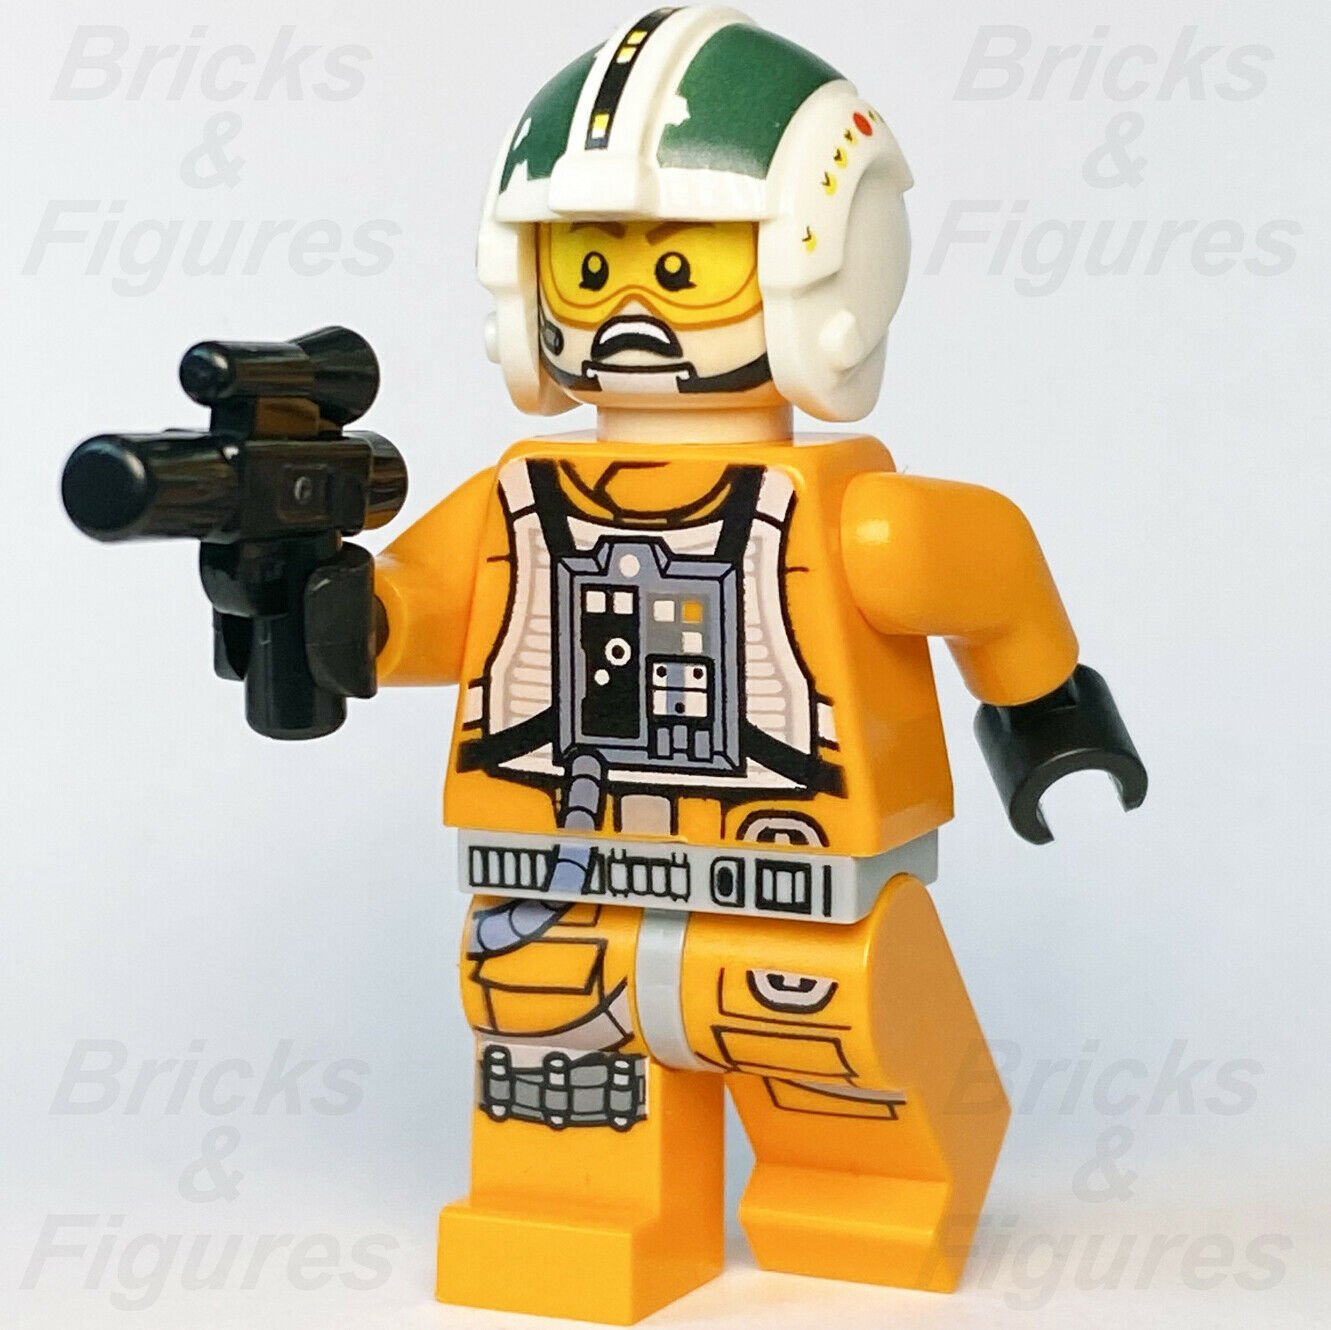 New Star Wars LEGO Wedge Antilles Rebel Snowspeeder Pilot Minifigure 75268 - Bricks & Figures